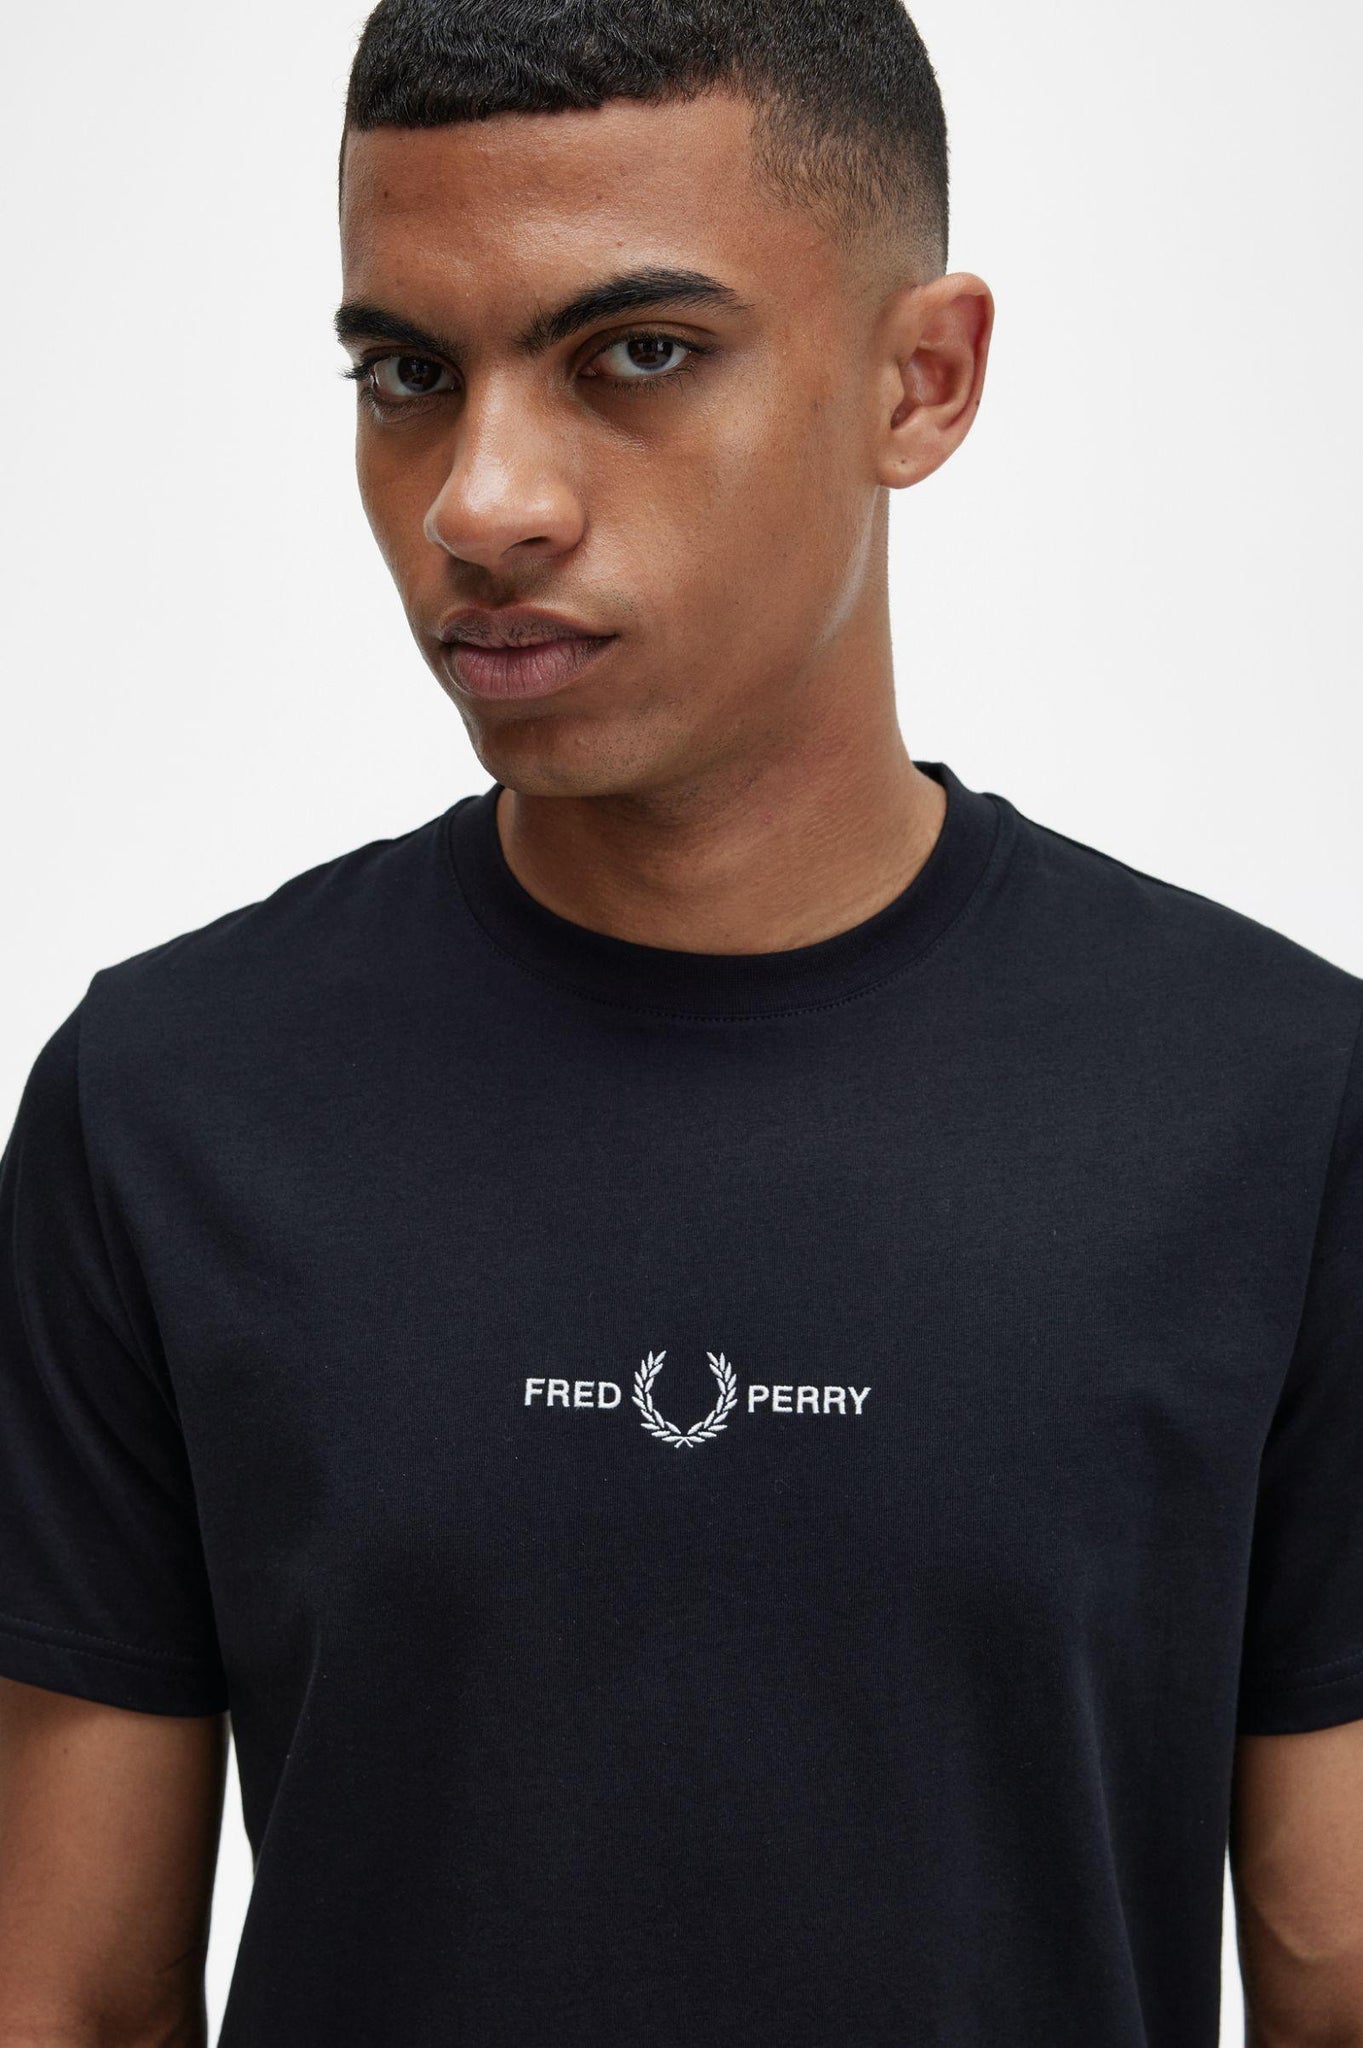 Camiseta Fred Perry Bordada M4580 Negra - ECRU